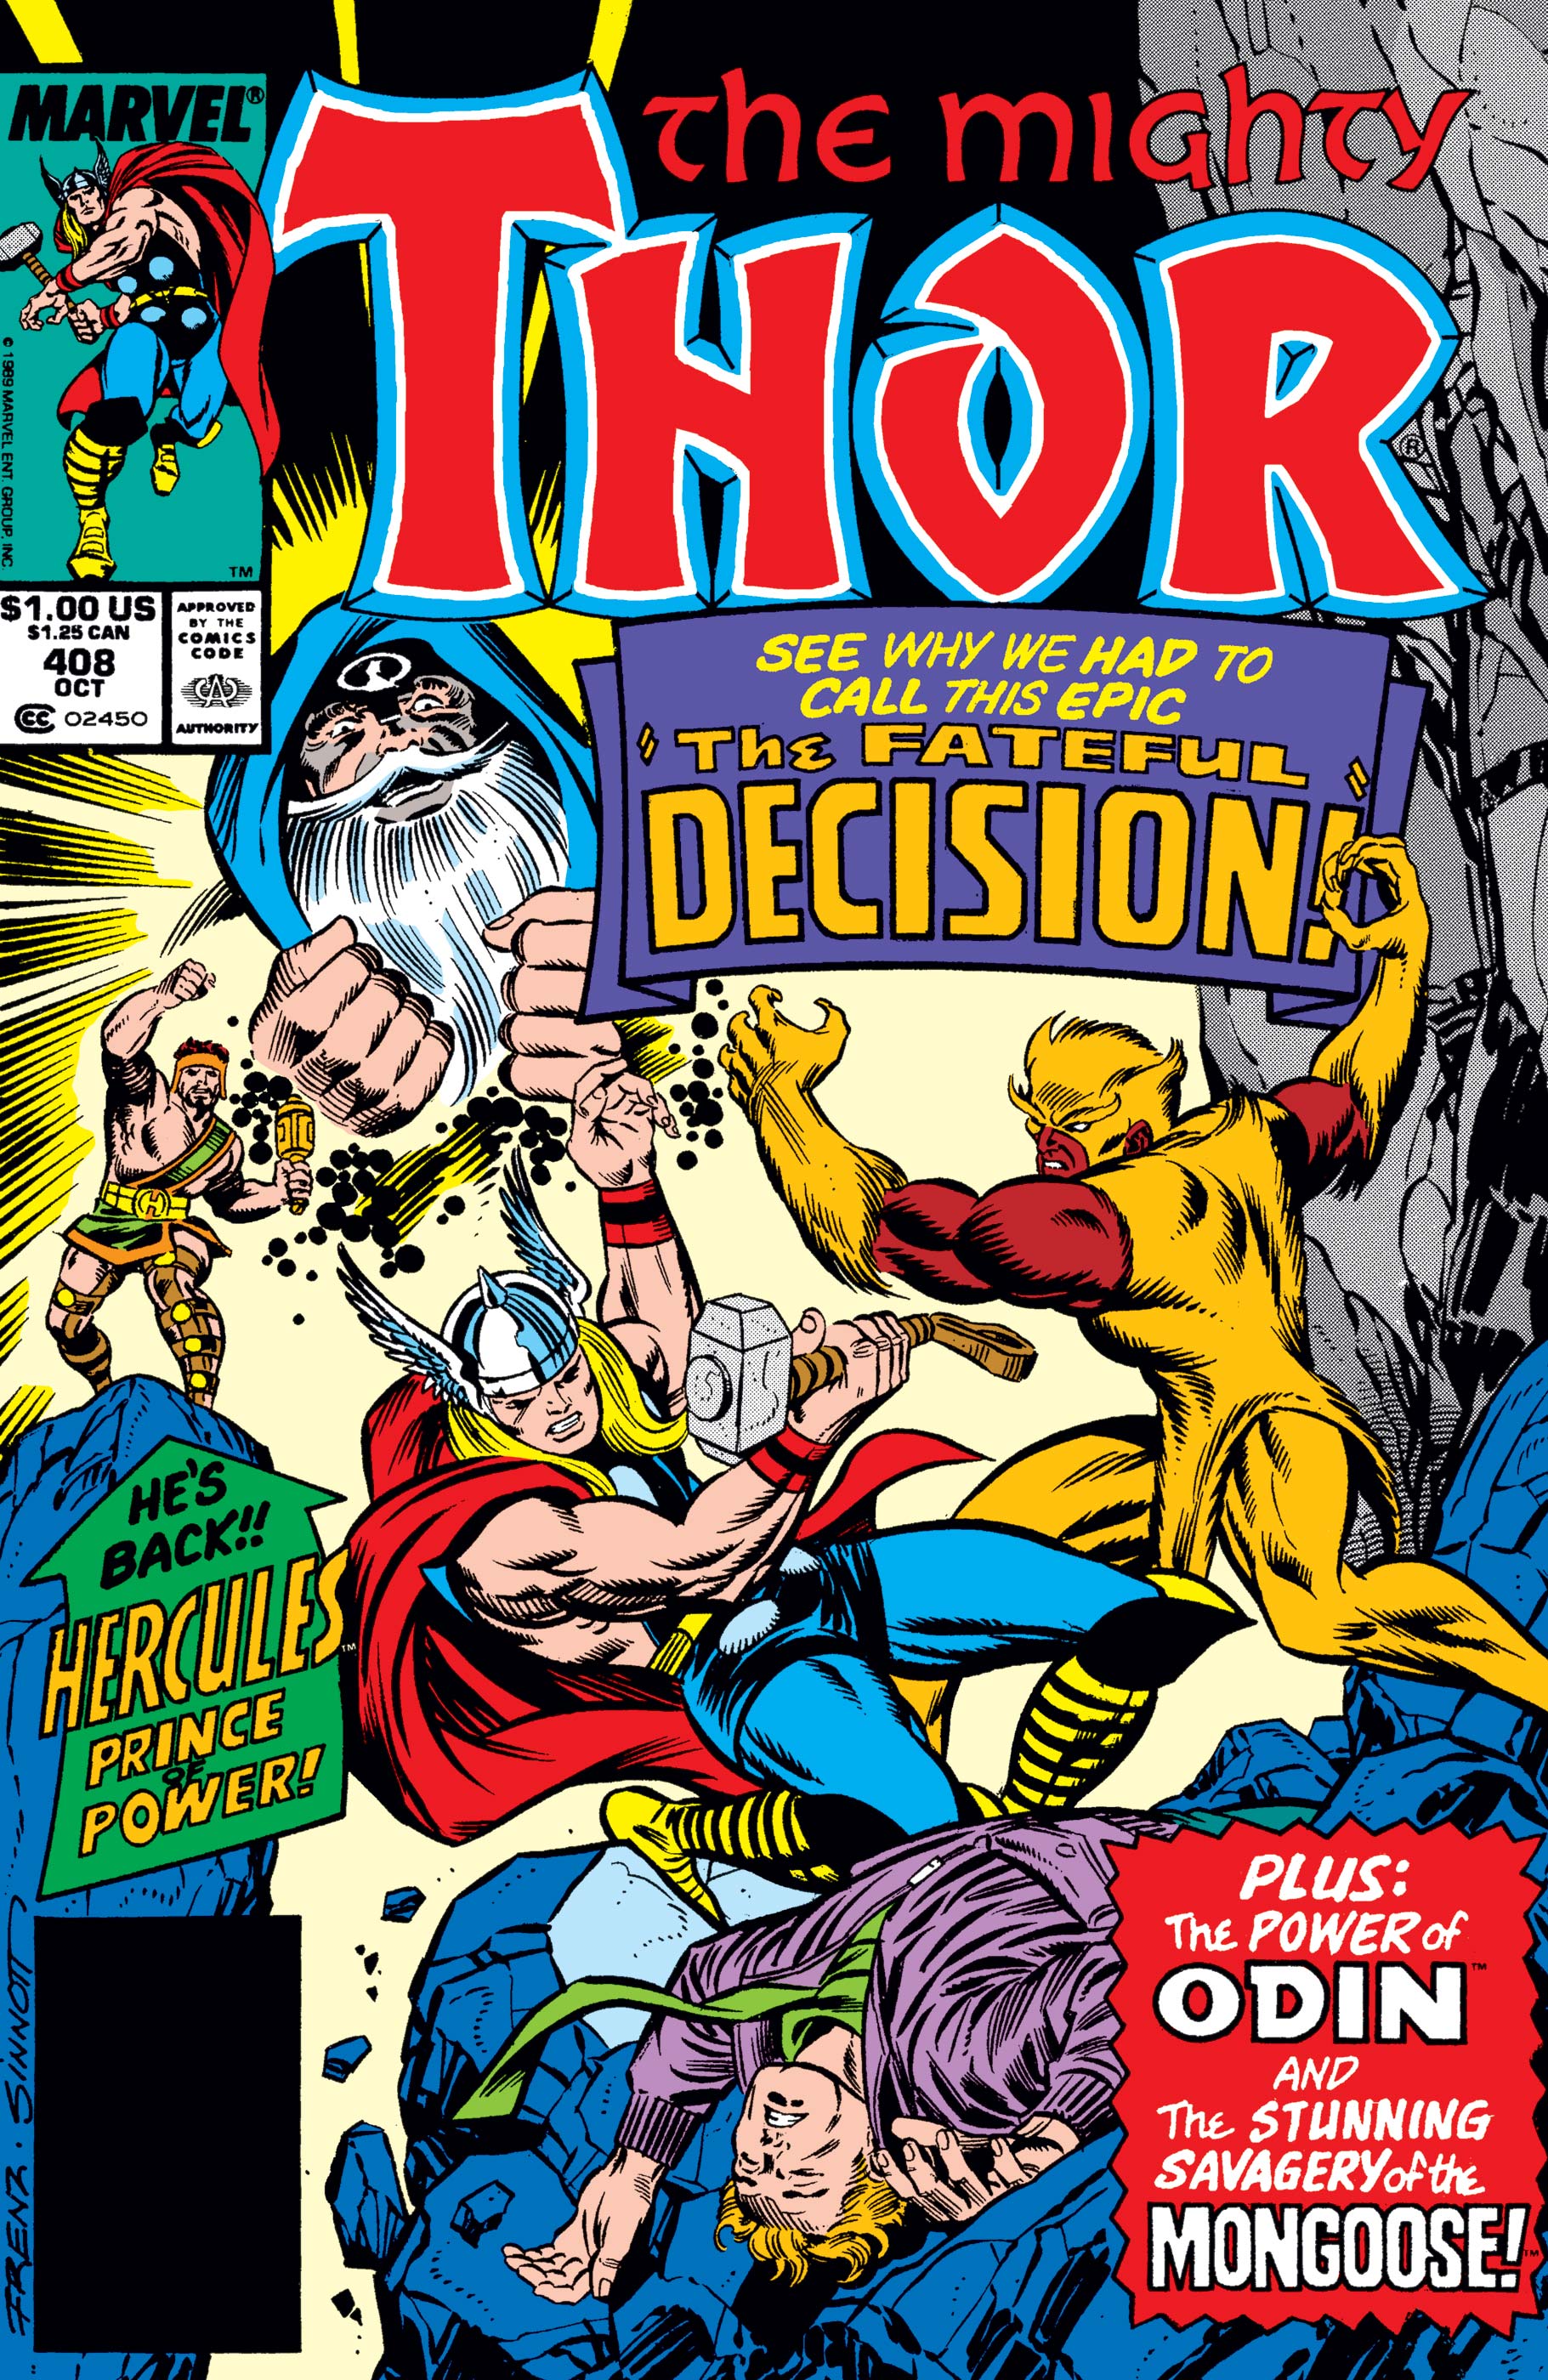 Thor (1966) #408